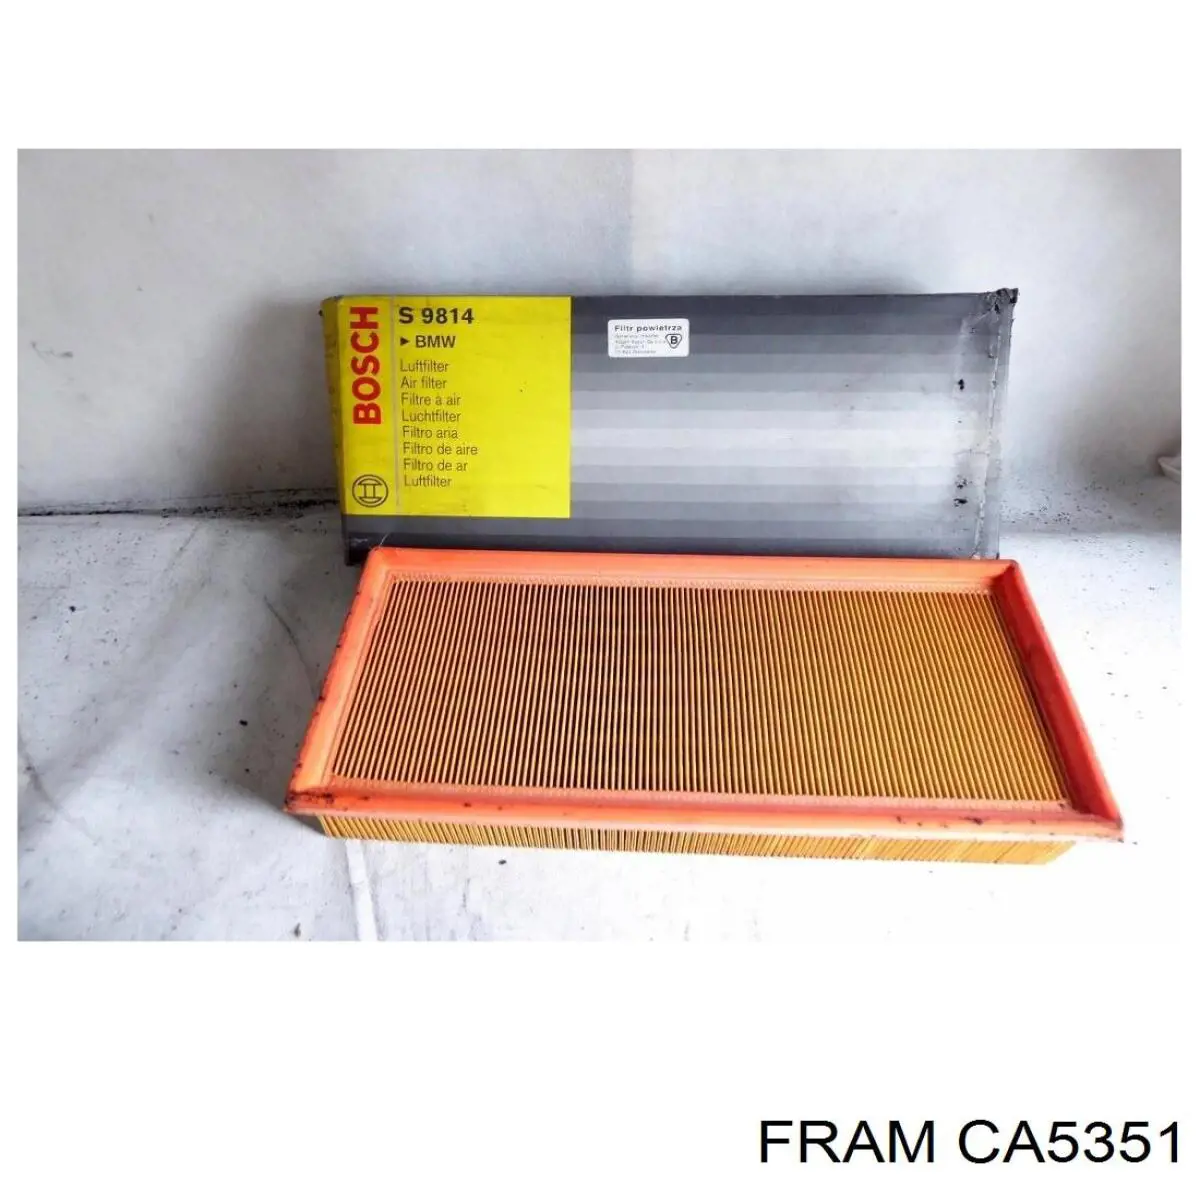 CA5351 Fram filtro de aire